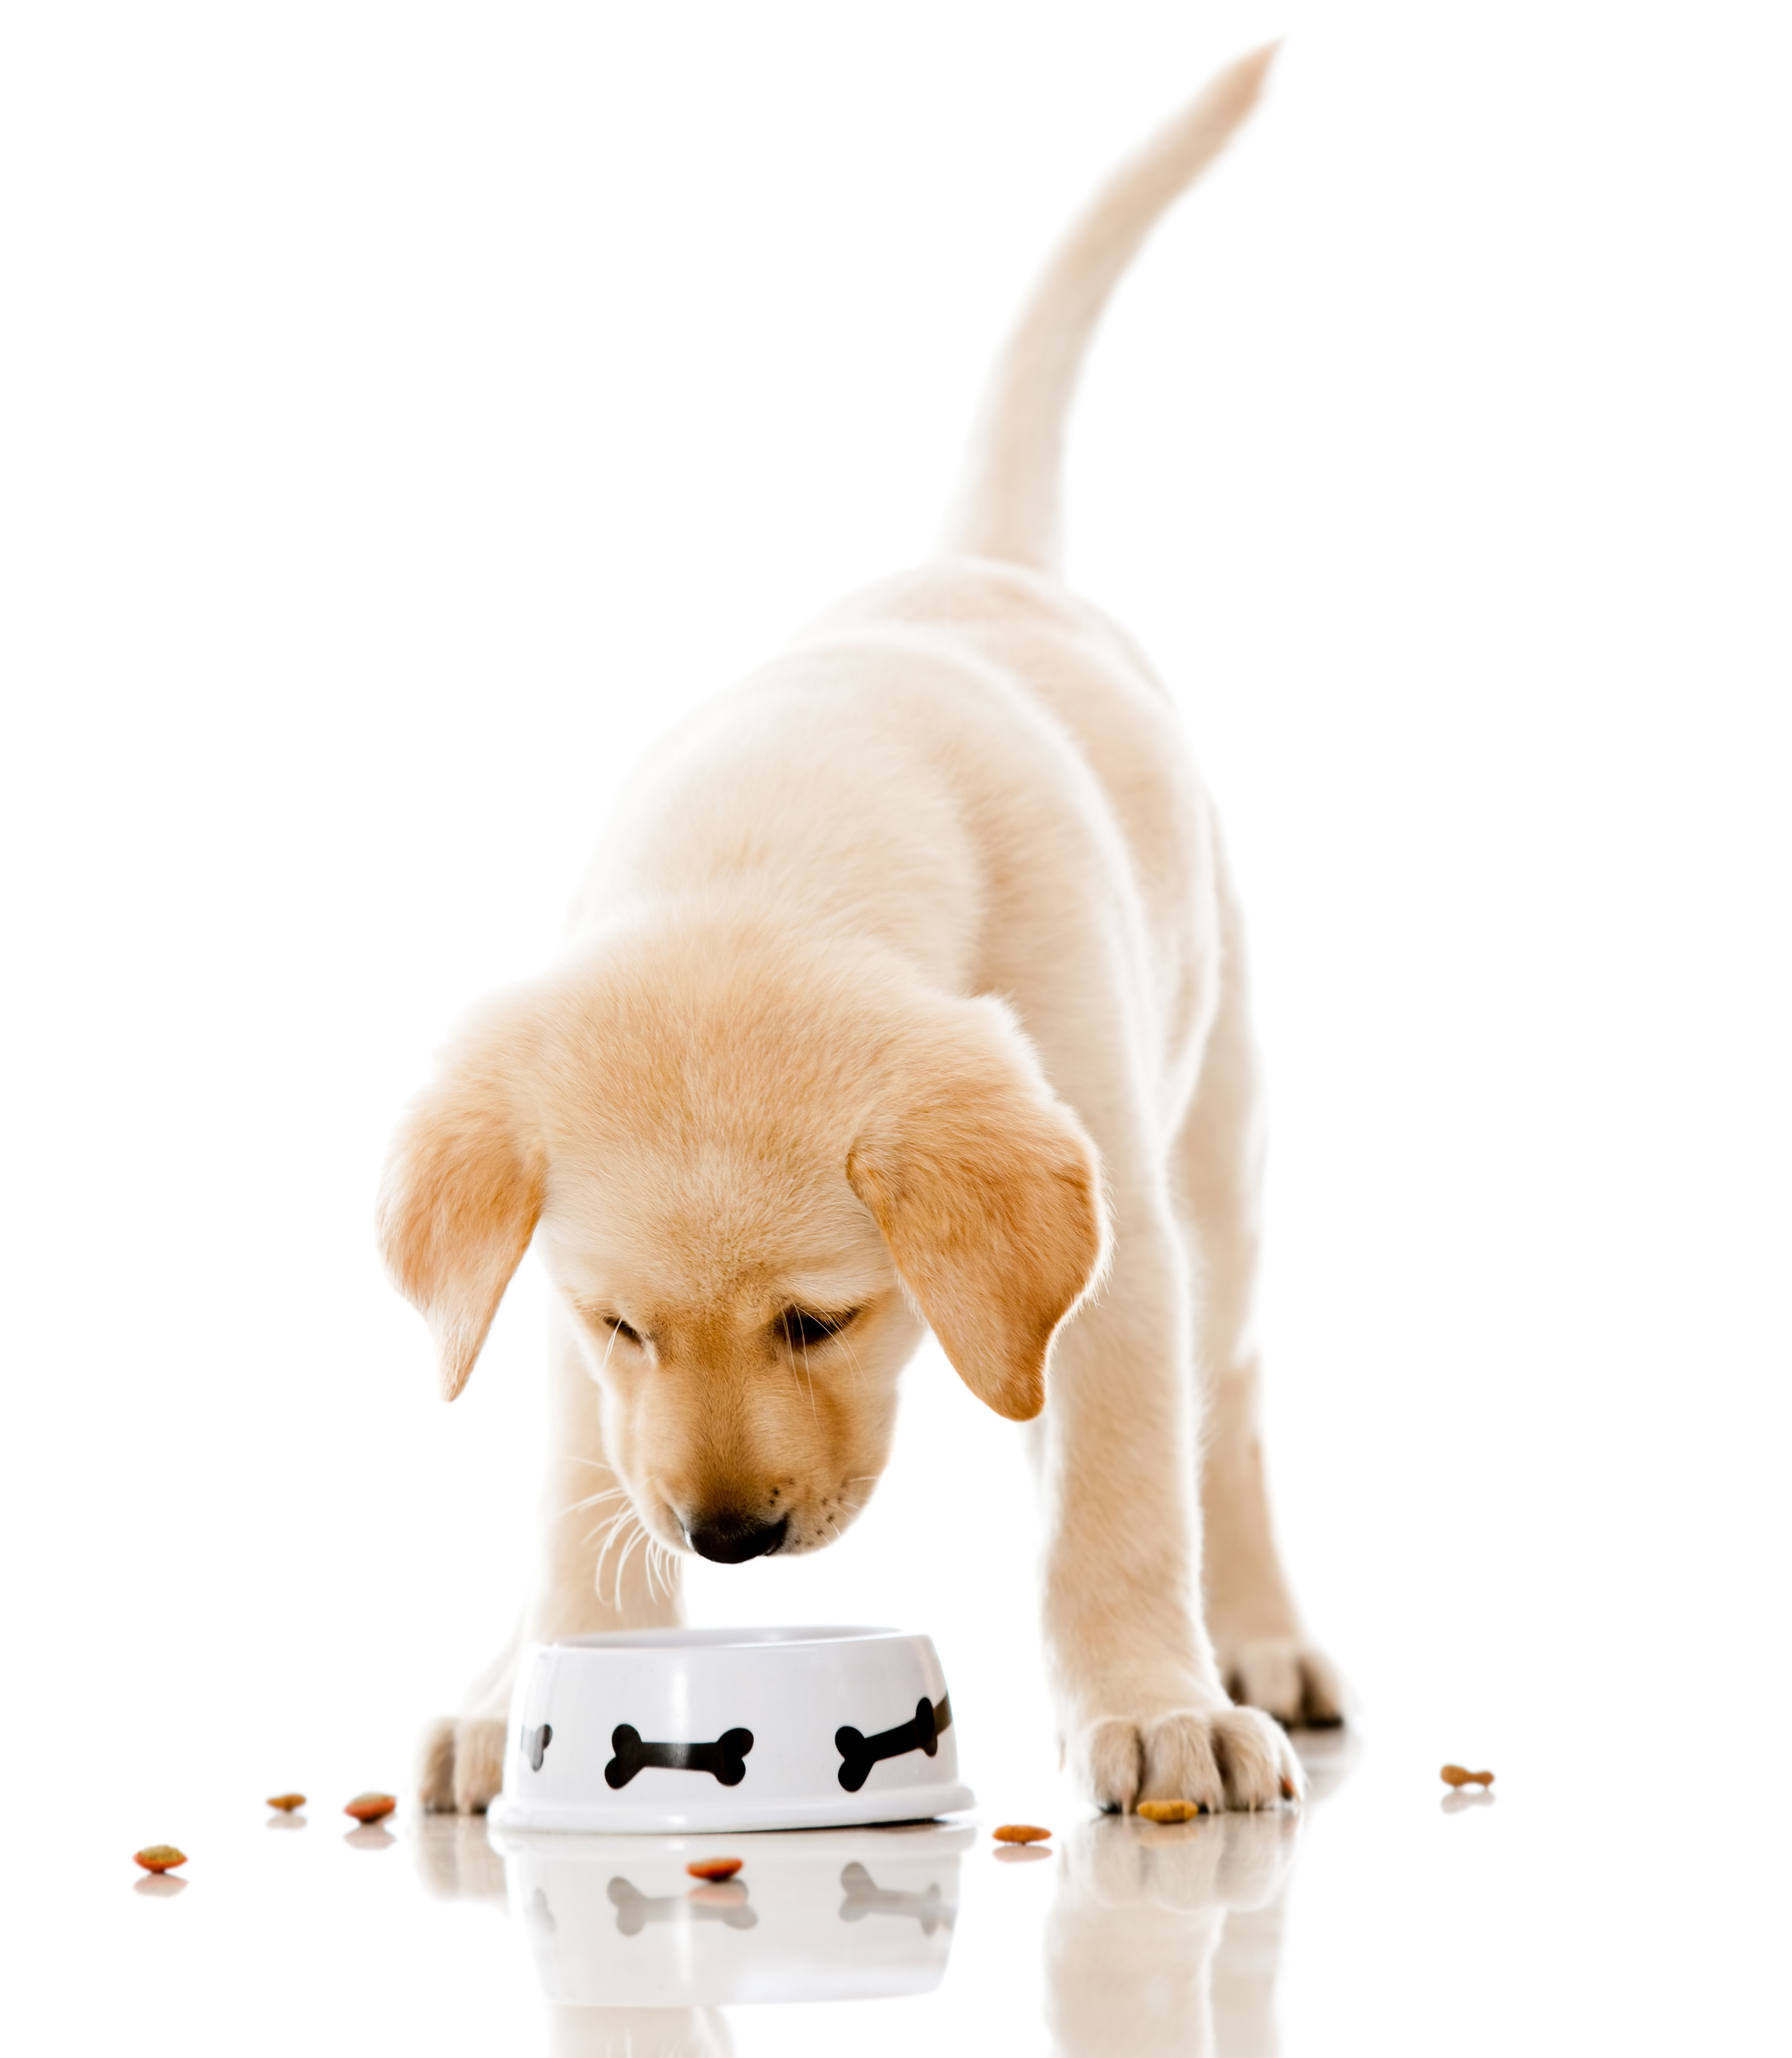 Why do dogs get sensitive stomachs? - Dogslife. Dog Breeds Magazine